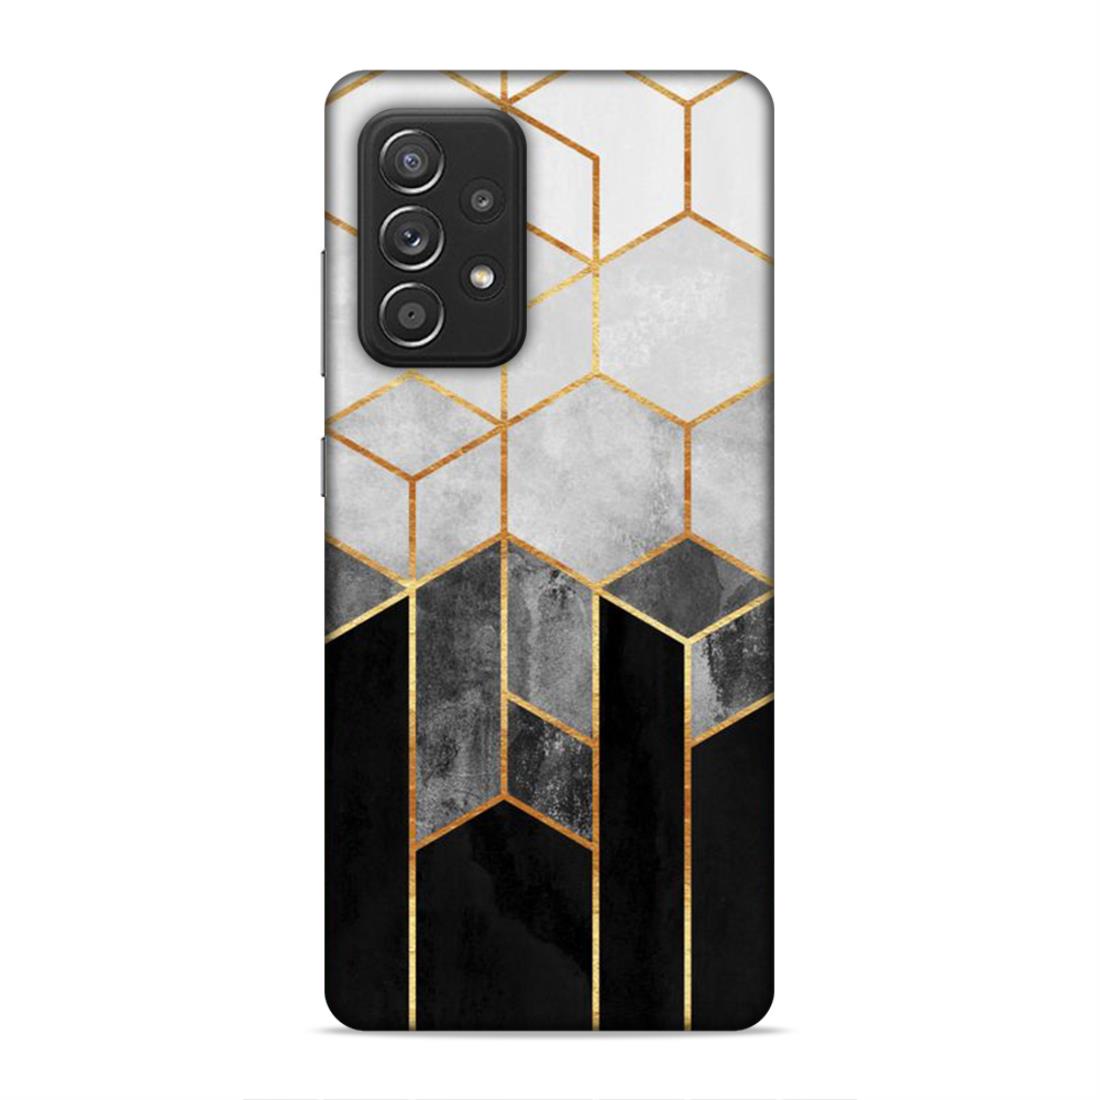 Hexagonal White Black Pattern Hard Back Case For Samsung Galaxy A52 / A52s 5G